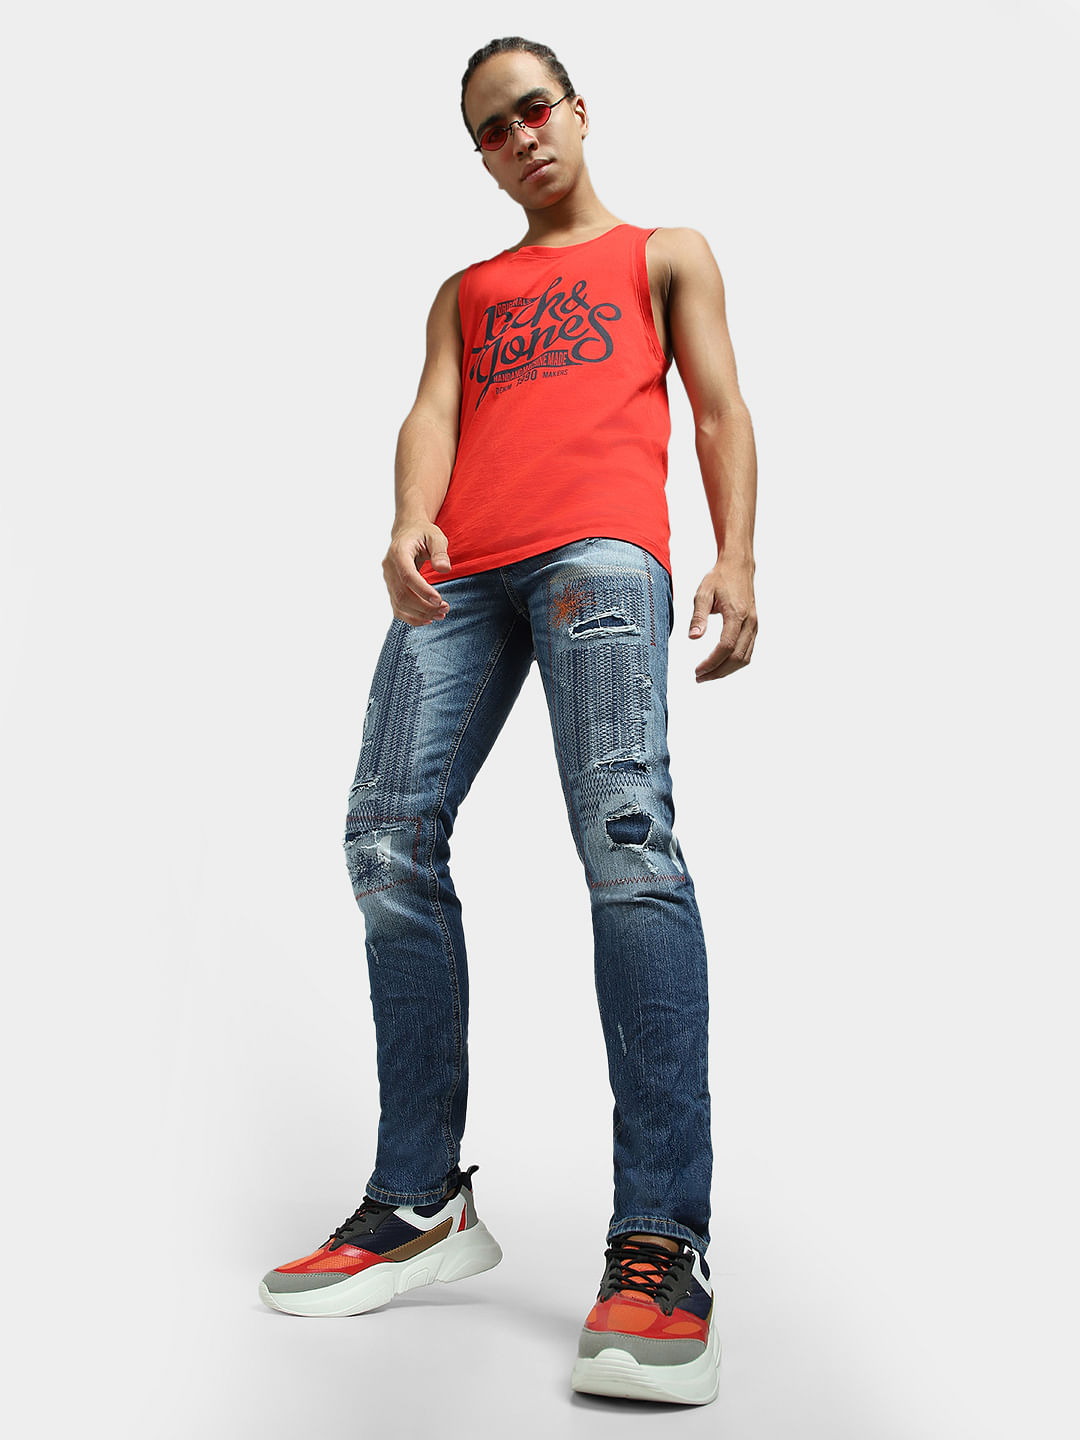 jeans men - Buy jeans men Online Starting at Just ₹311 | Meesho